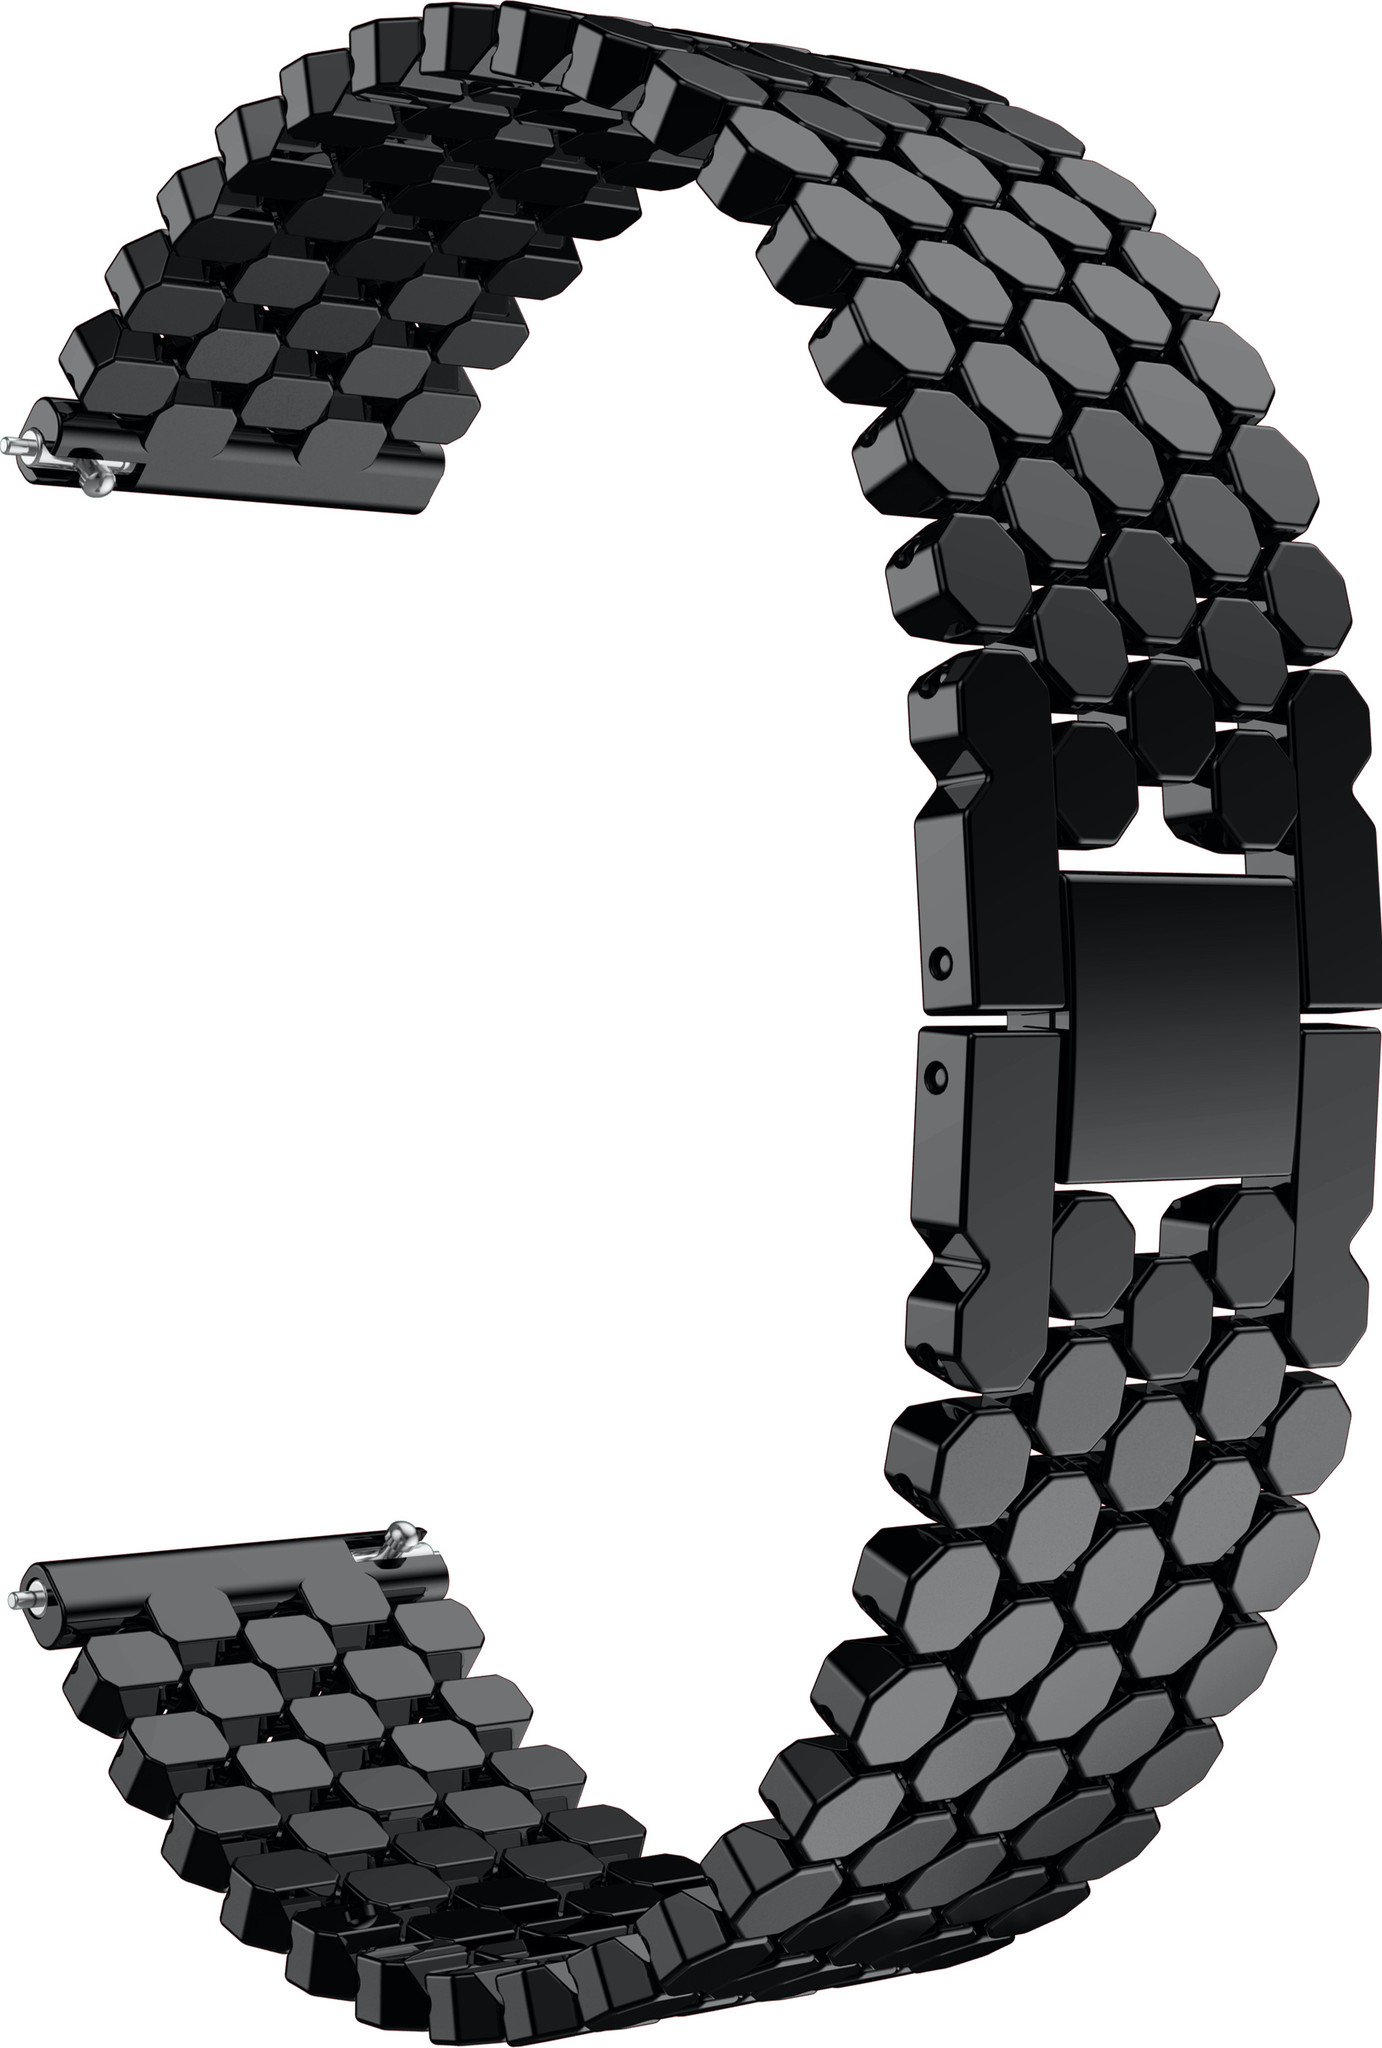 Cinturino a maglie in acciaio a forma di pesce per Samsung Galaxy Watch - nero